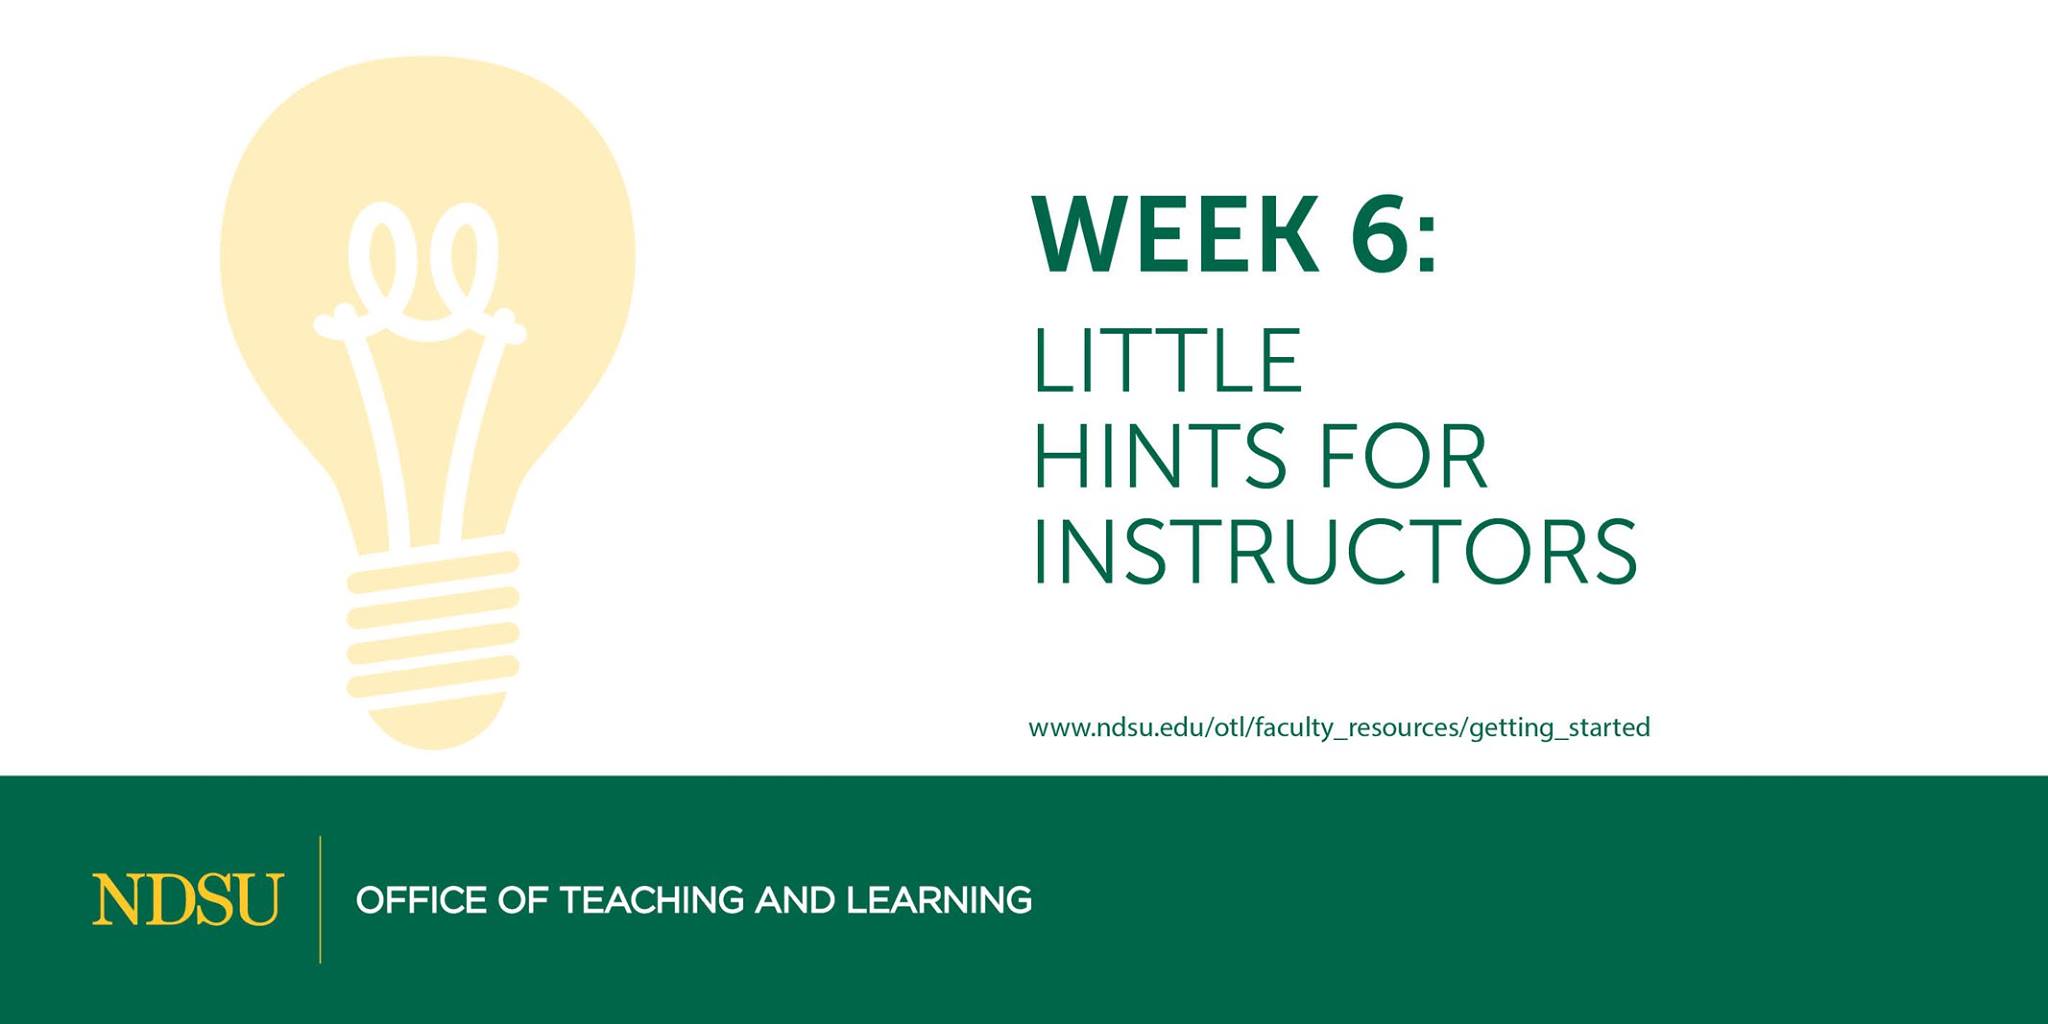 Week 6 Little Hints for Instructors